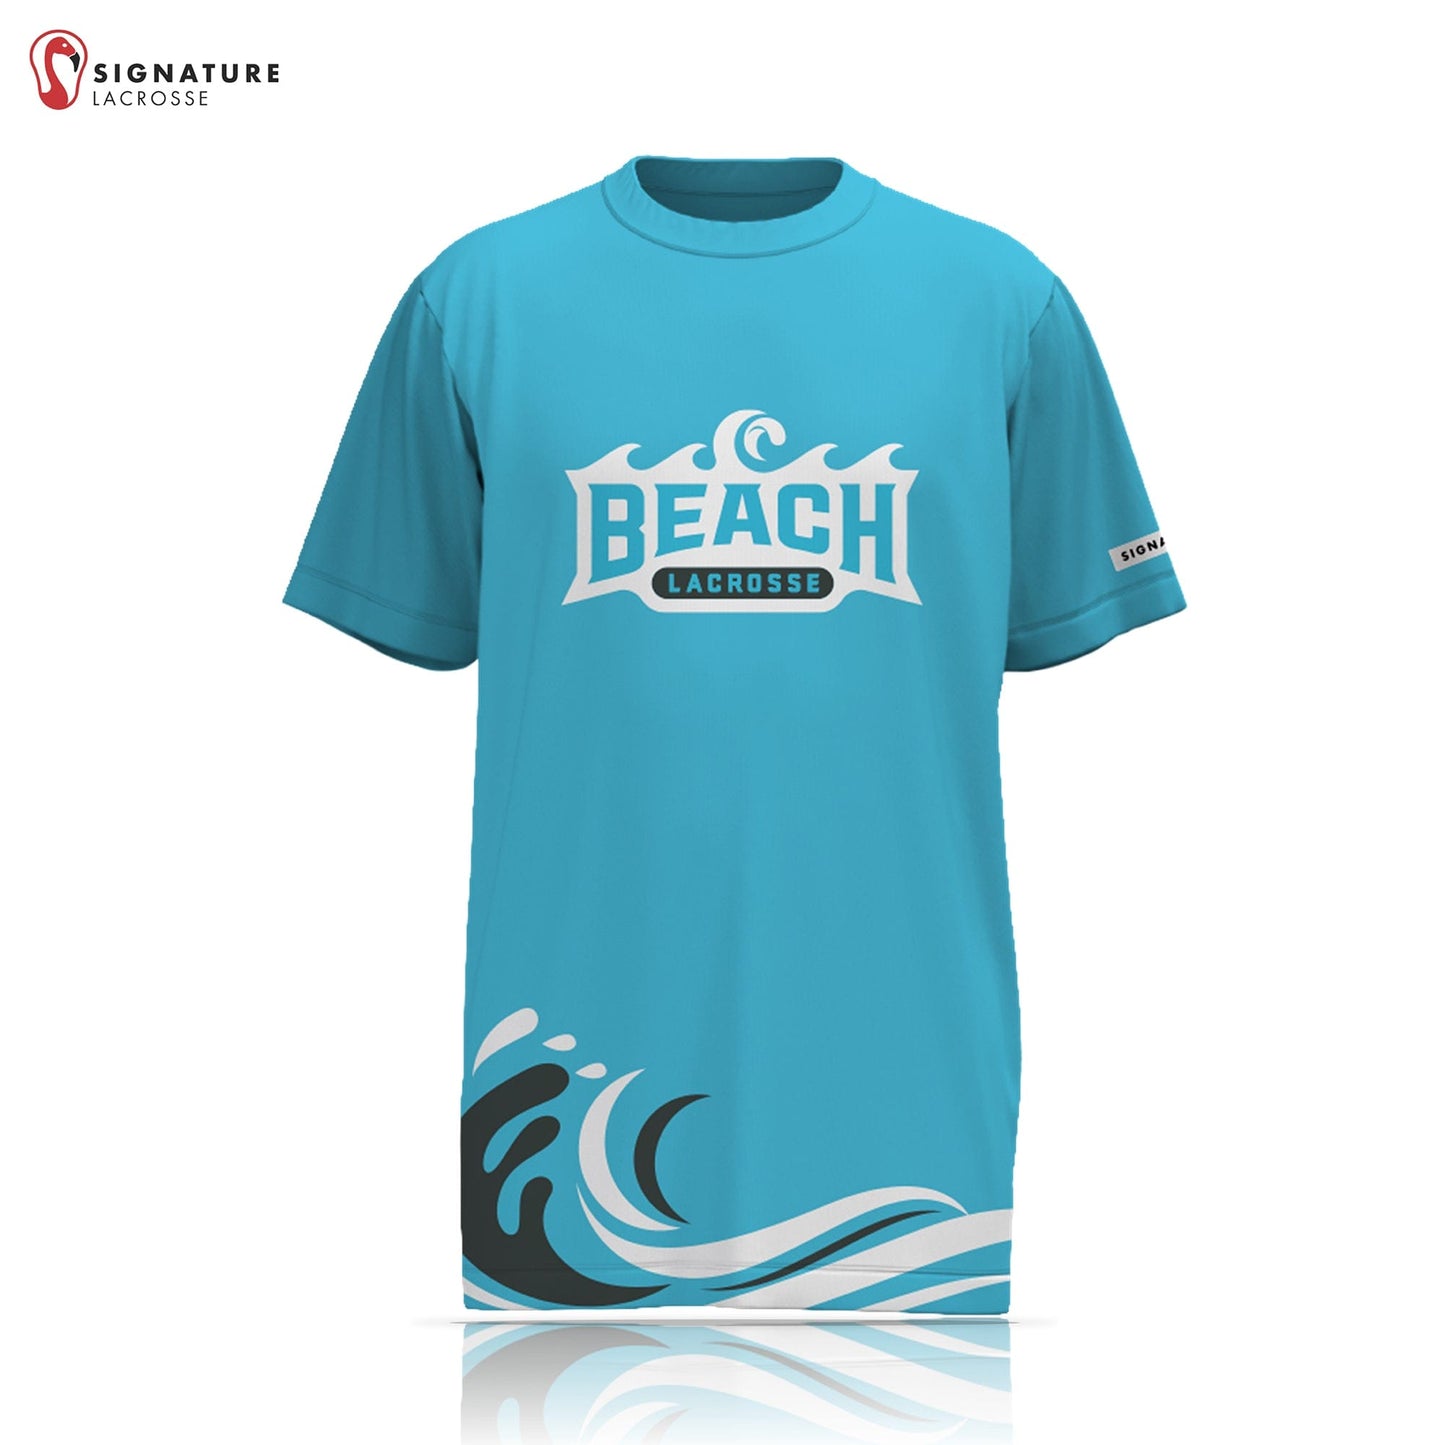 Beach Lacrosse Women's Short Sleeve Shooting Shirt Signature Lacrosse